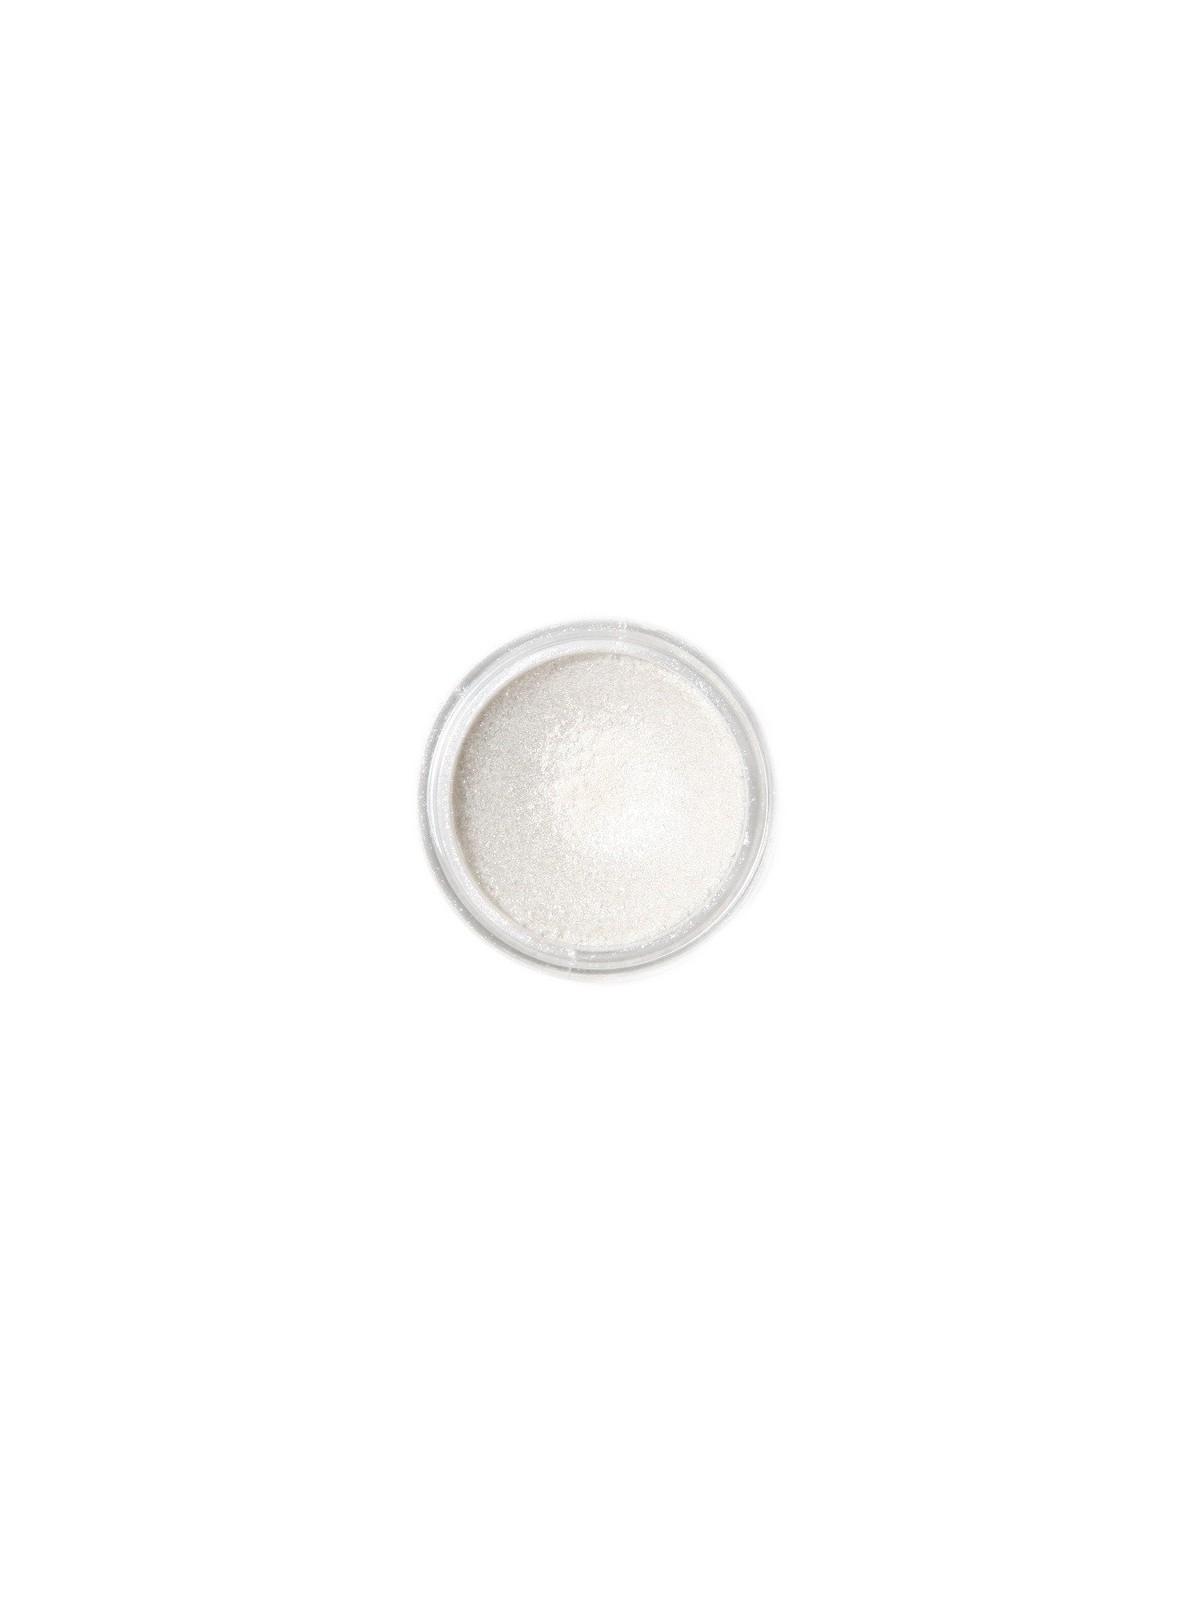 Edible dust pearl white Fractal - Sparkling White, Szikrázó fehér (3.5 g)